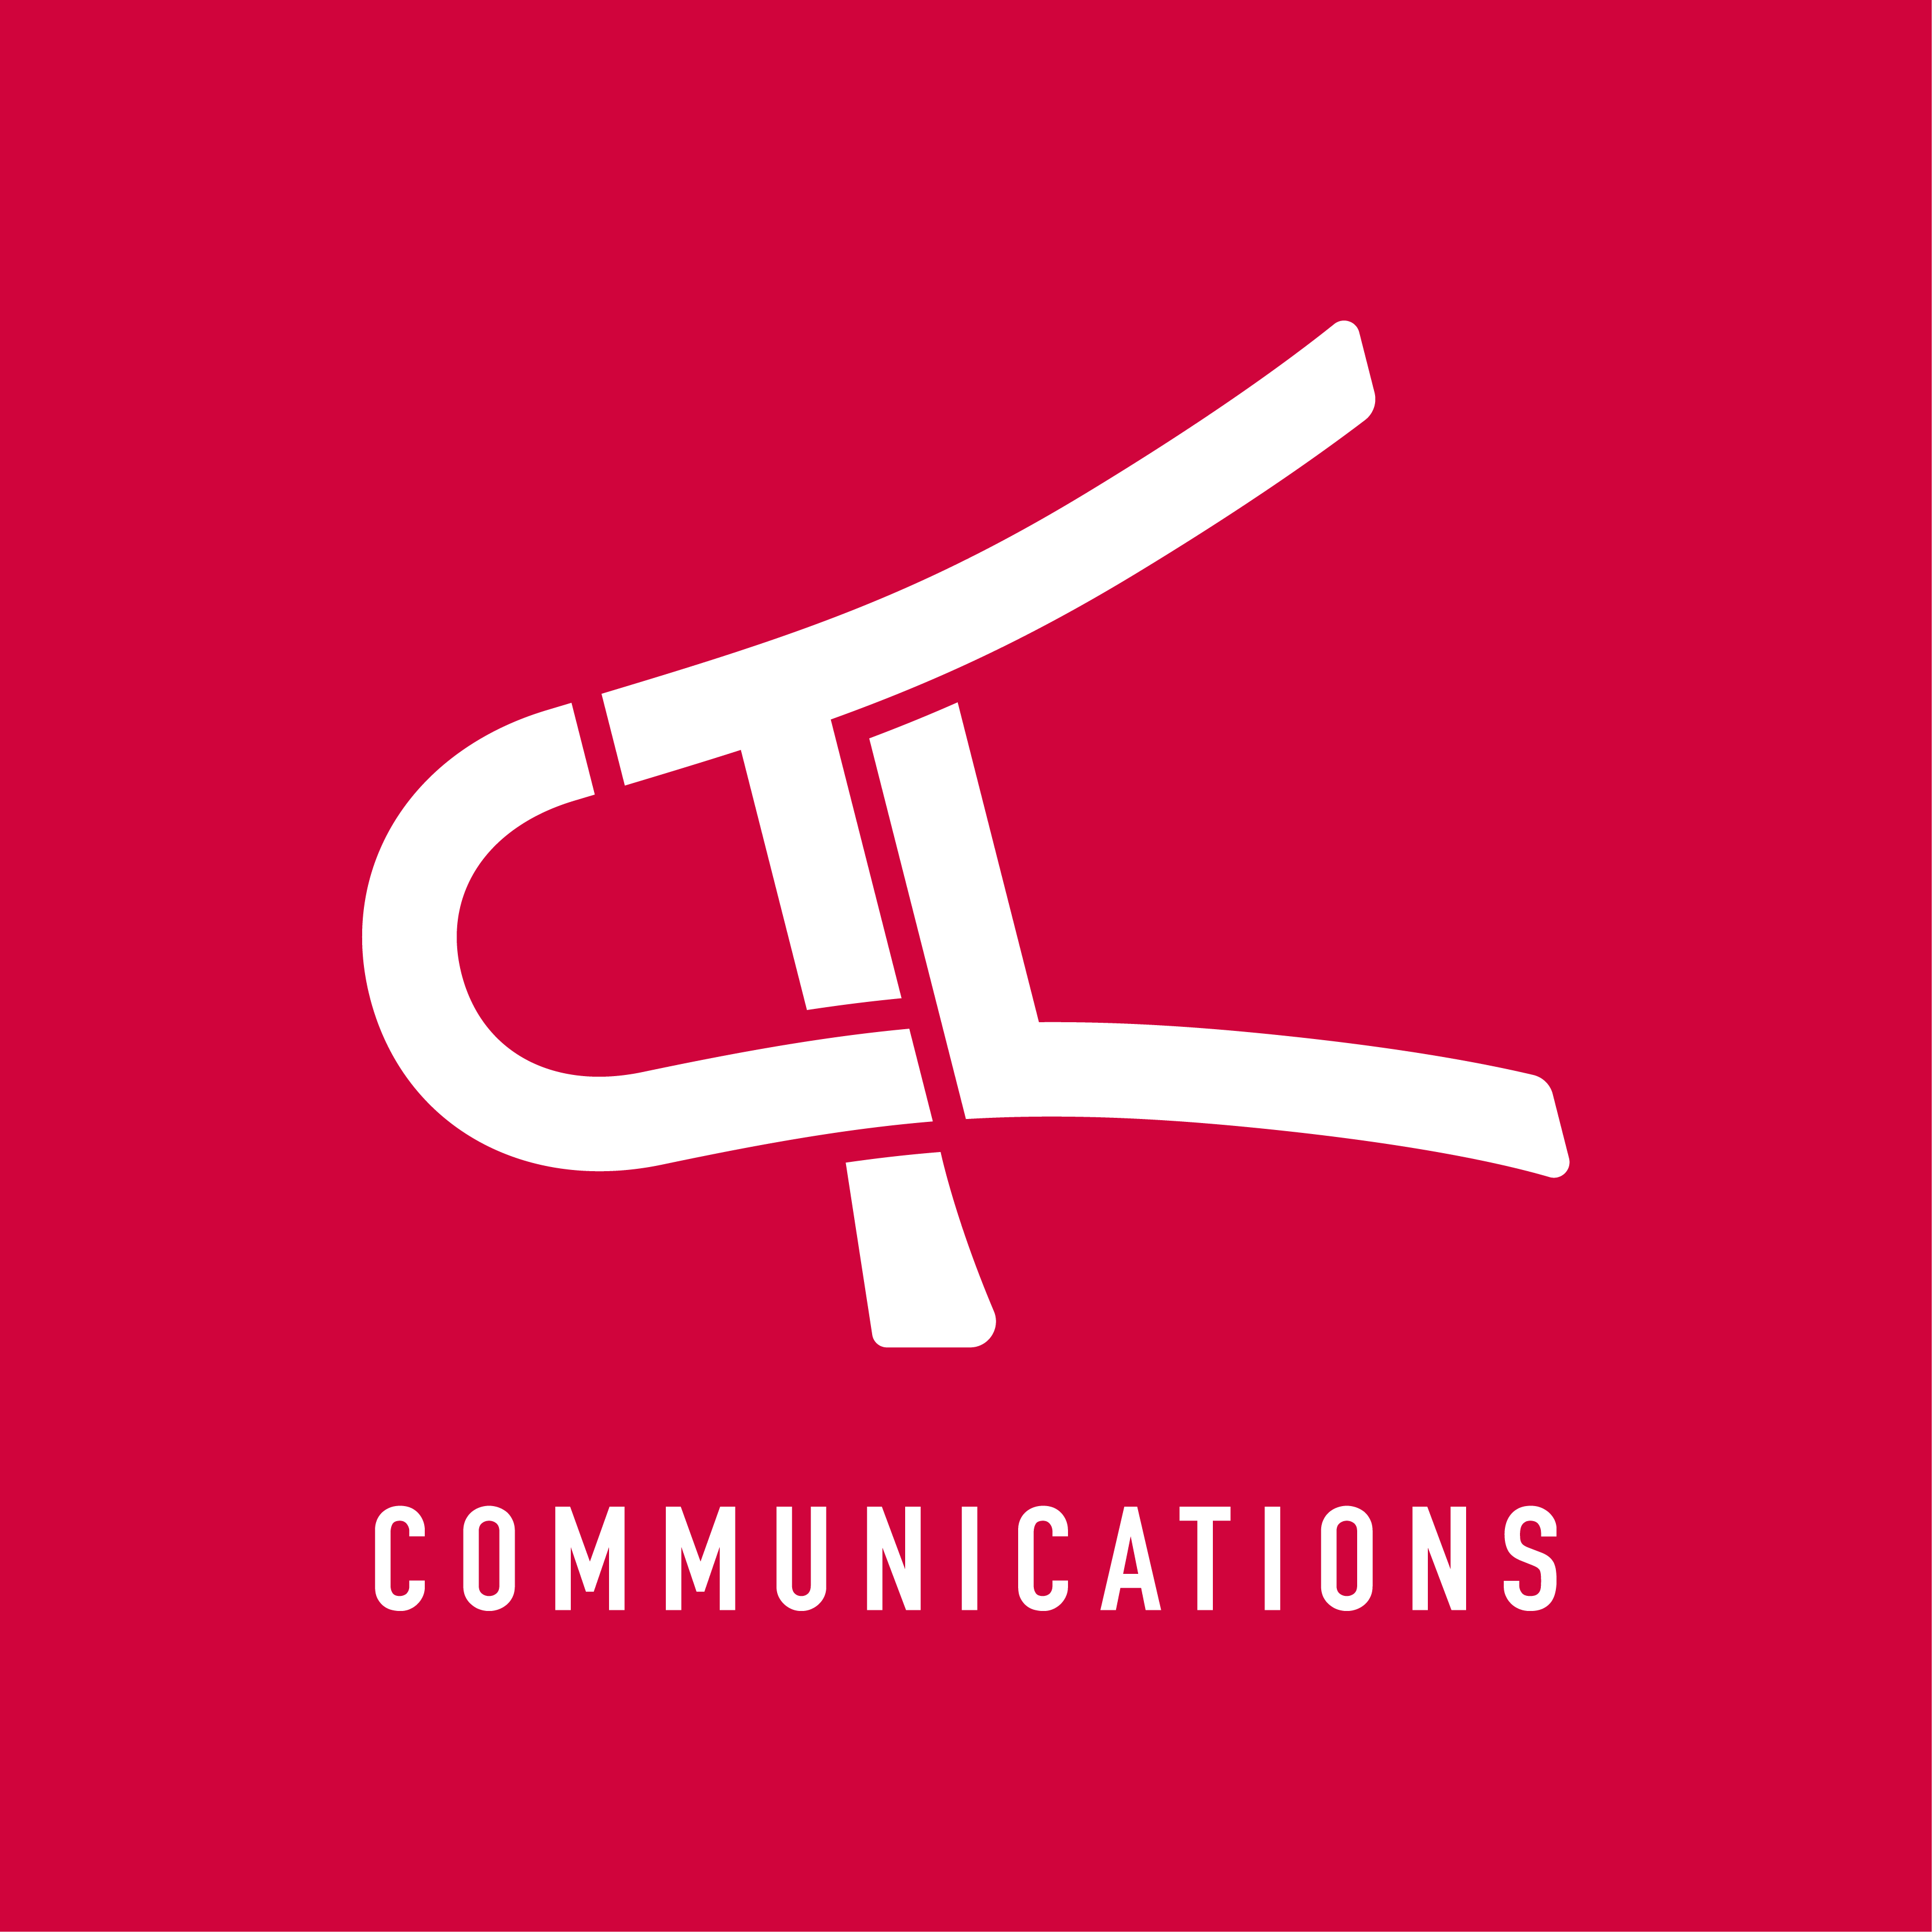 CTL Communications